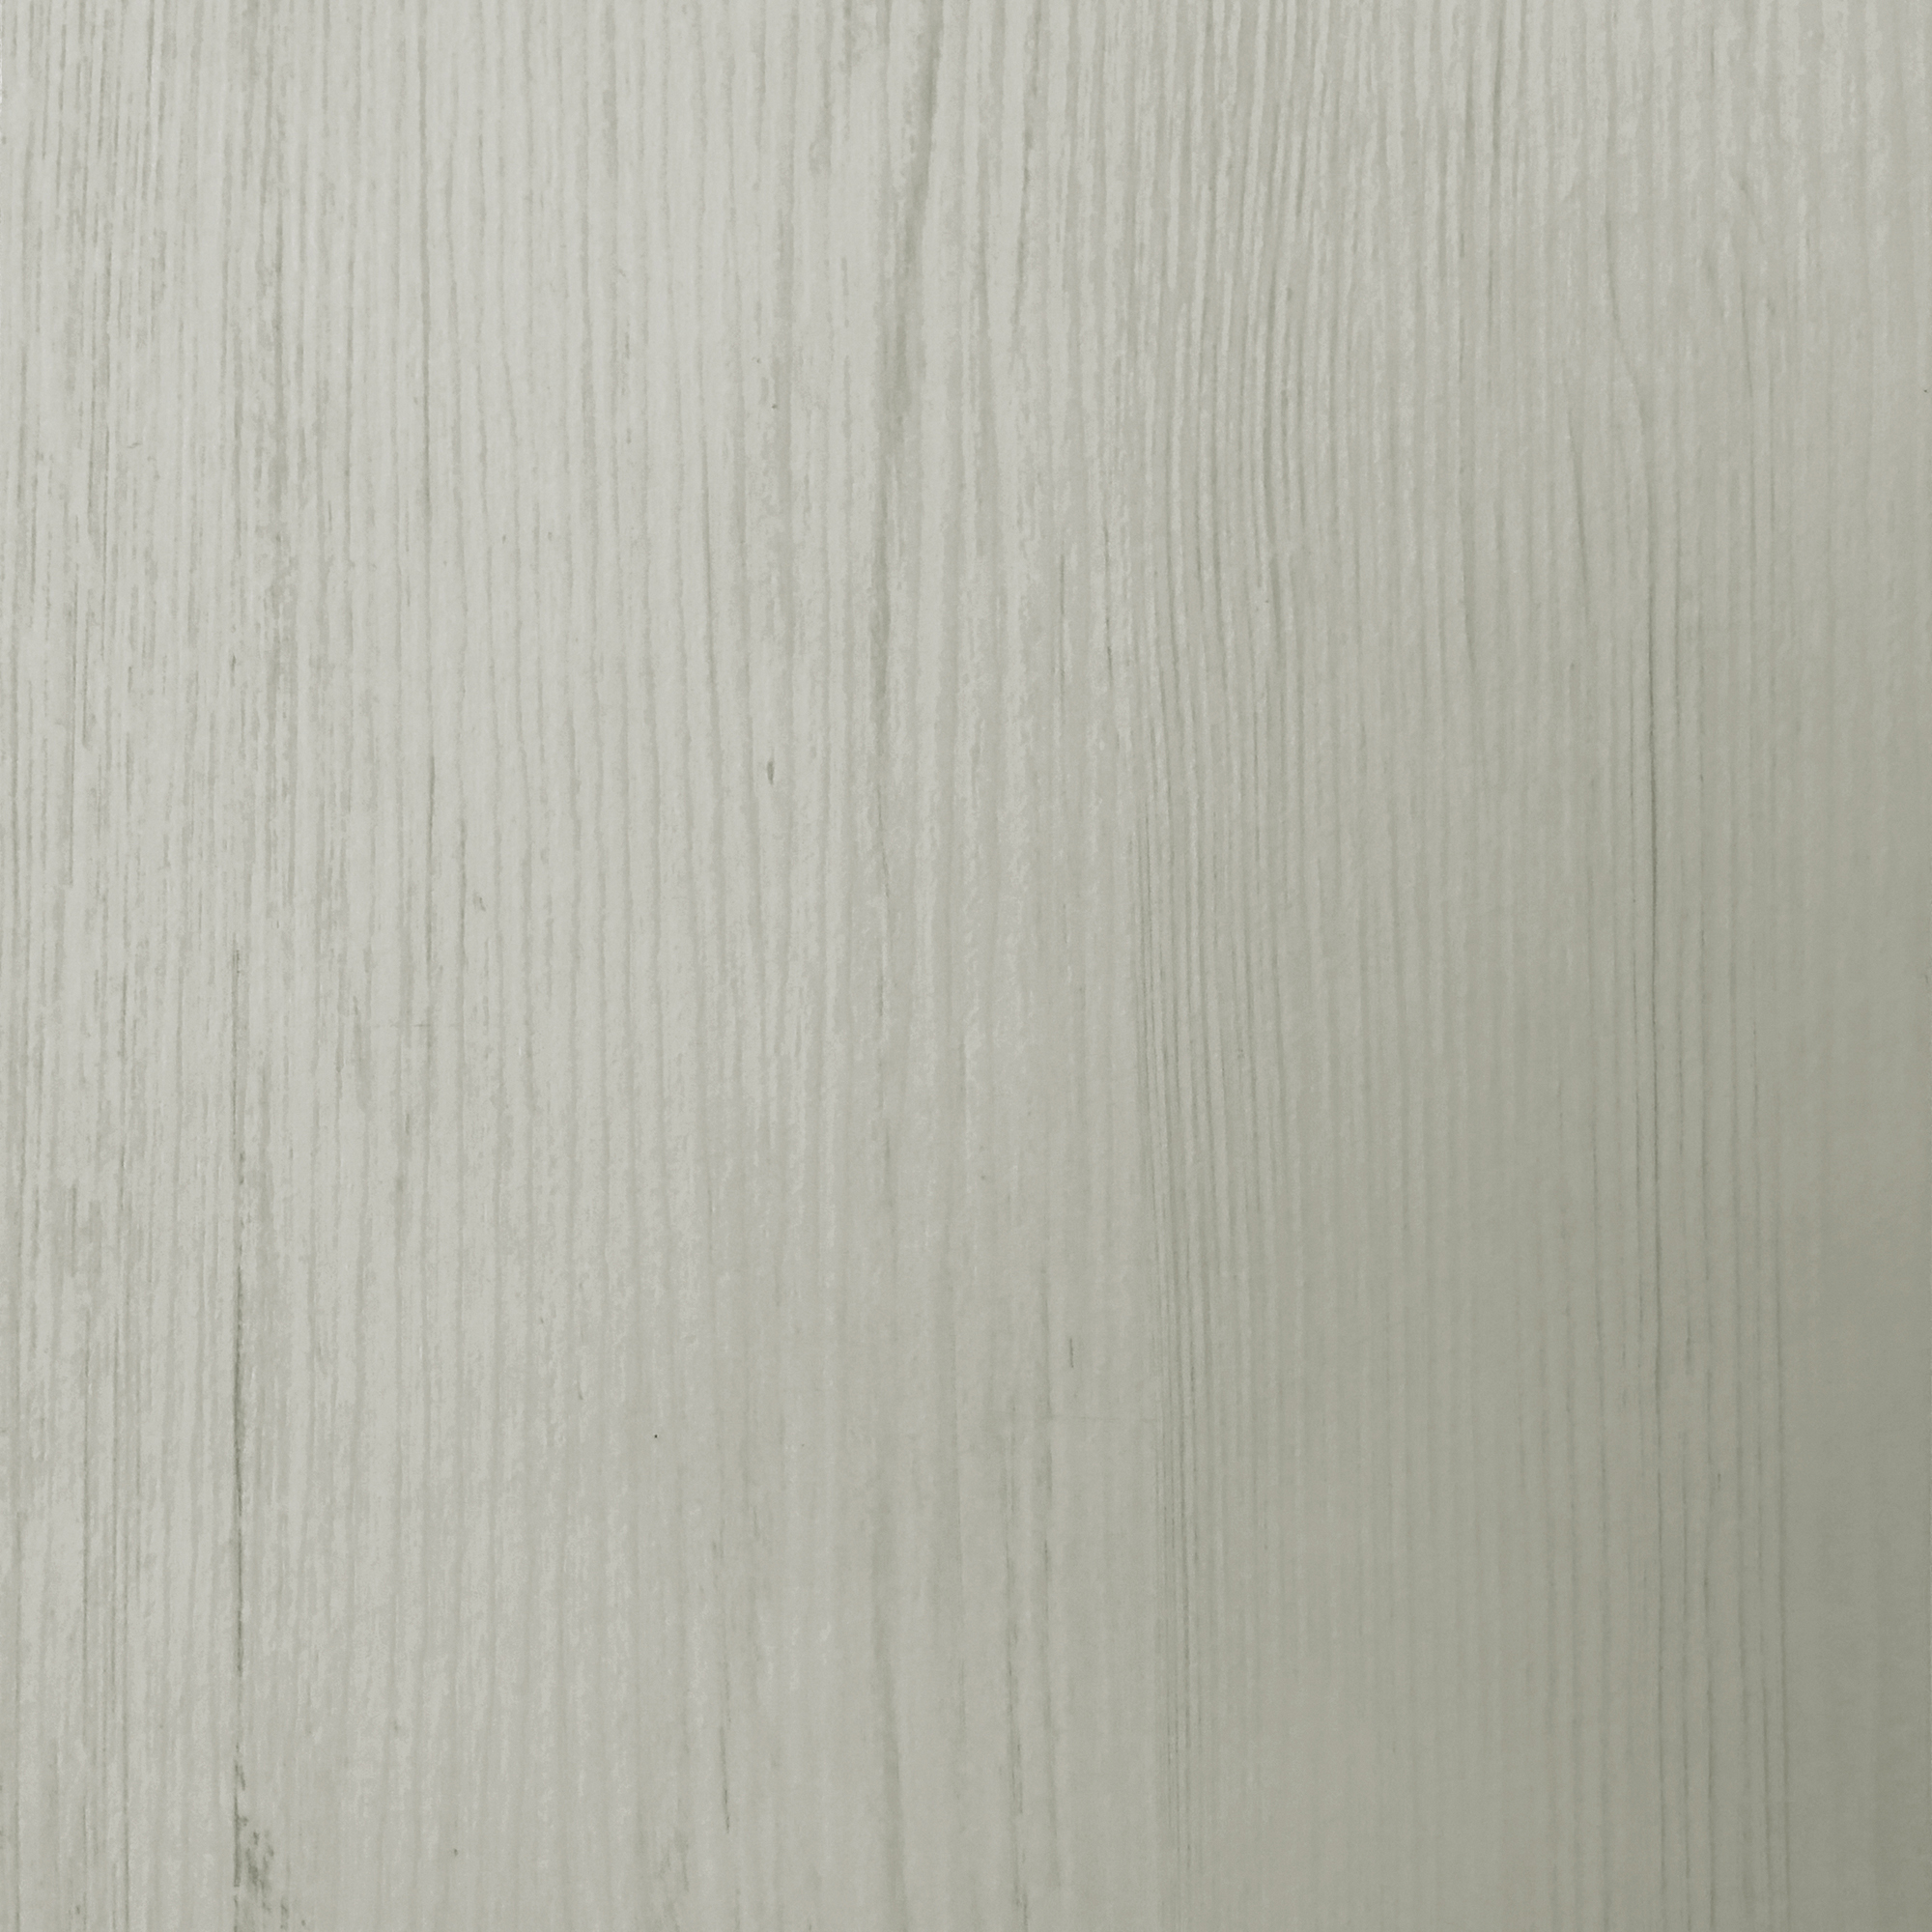 Duarti By Calypso White Pine Postformed Slimline Worktop